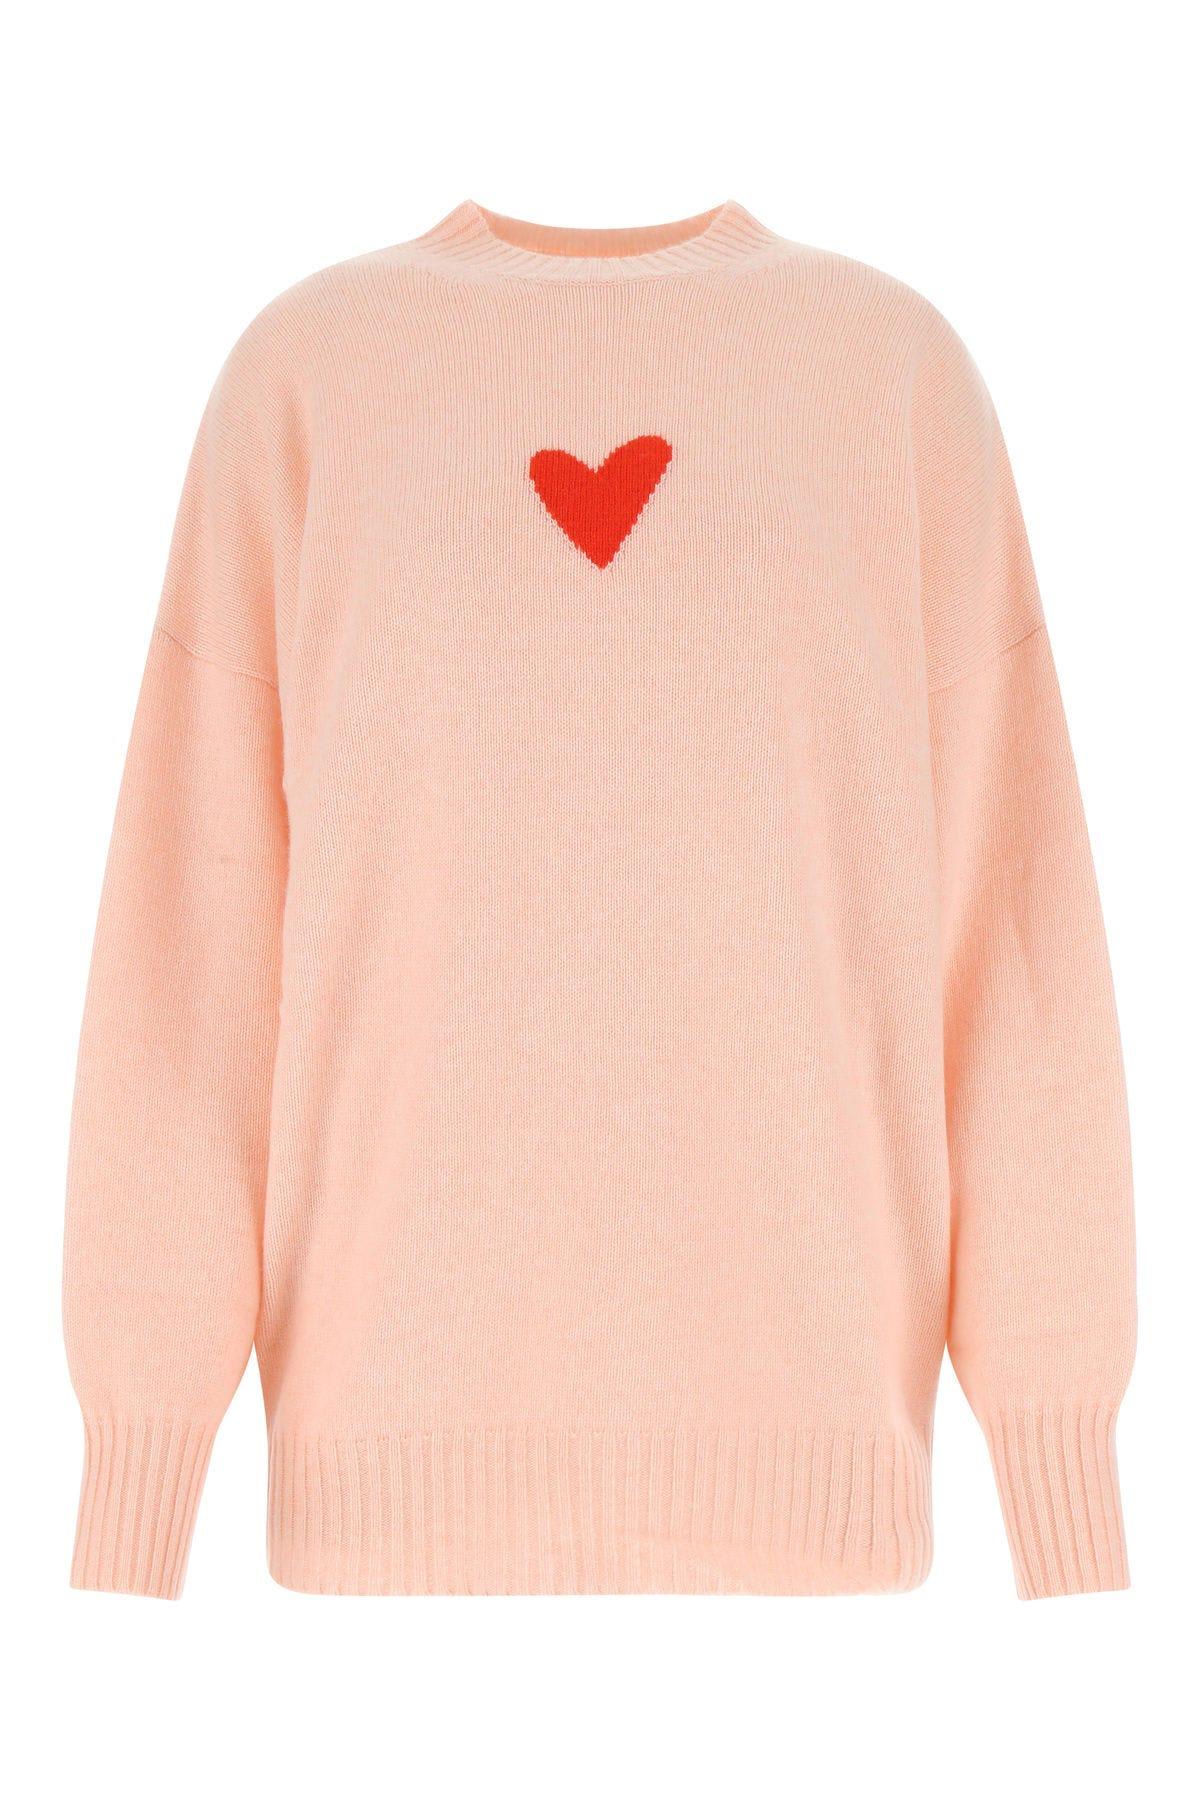 Max Mara Light Pink Cashmere Oversize Olga Sweater